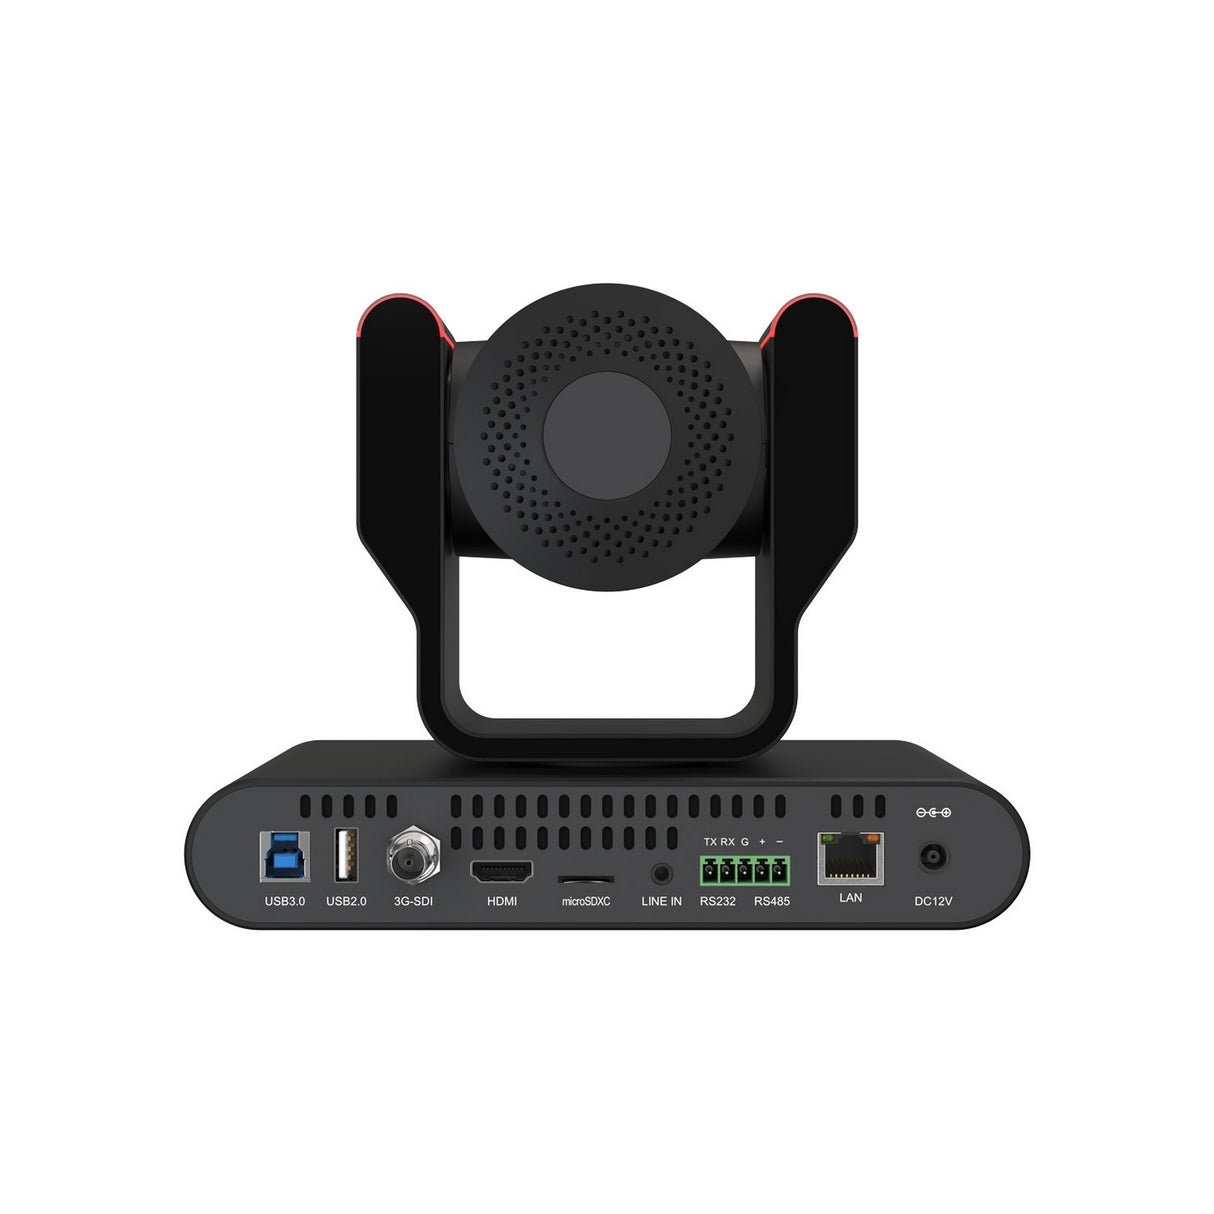 BZBGEAR ADAMO 12X 1080P FHD Auto Tracking HDMI/3G-SDI/USB 2.0/USB 3.0 Live Streaming PTZ Camera